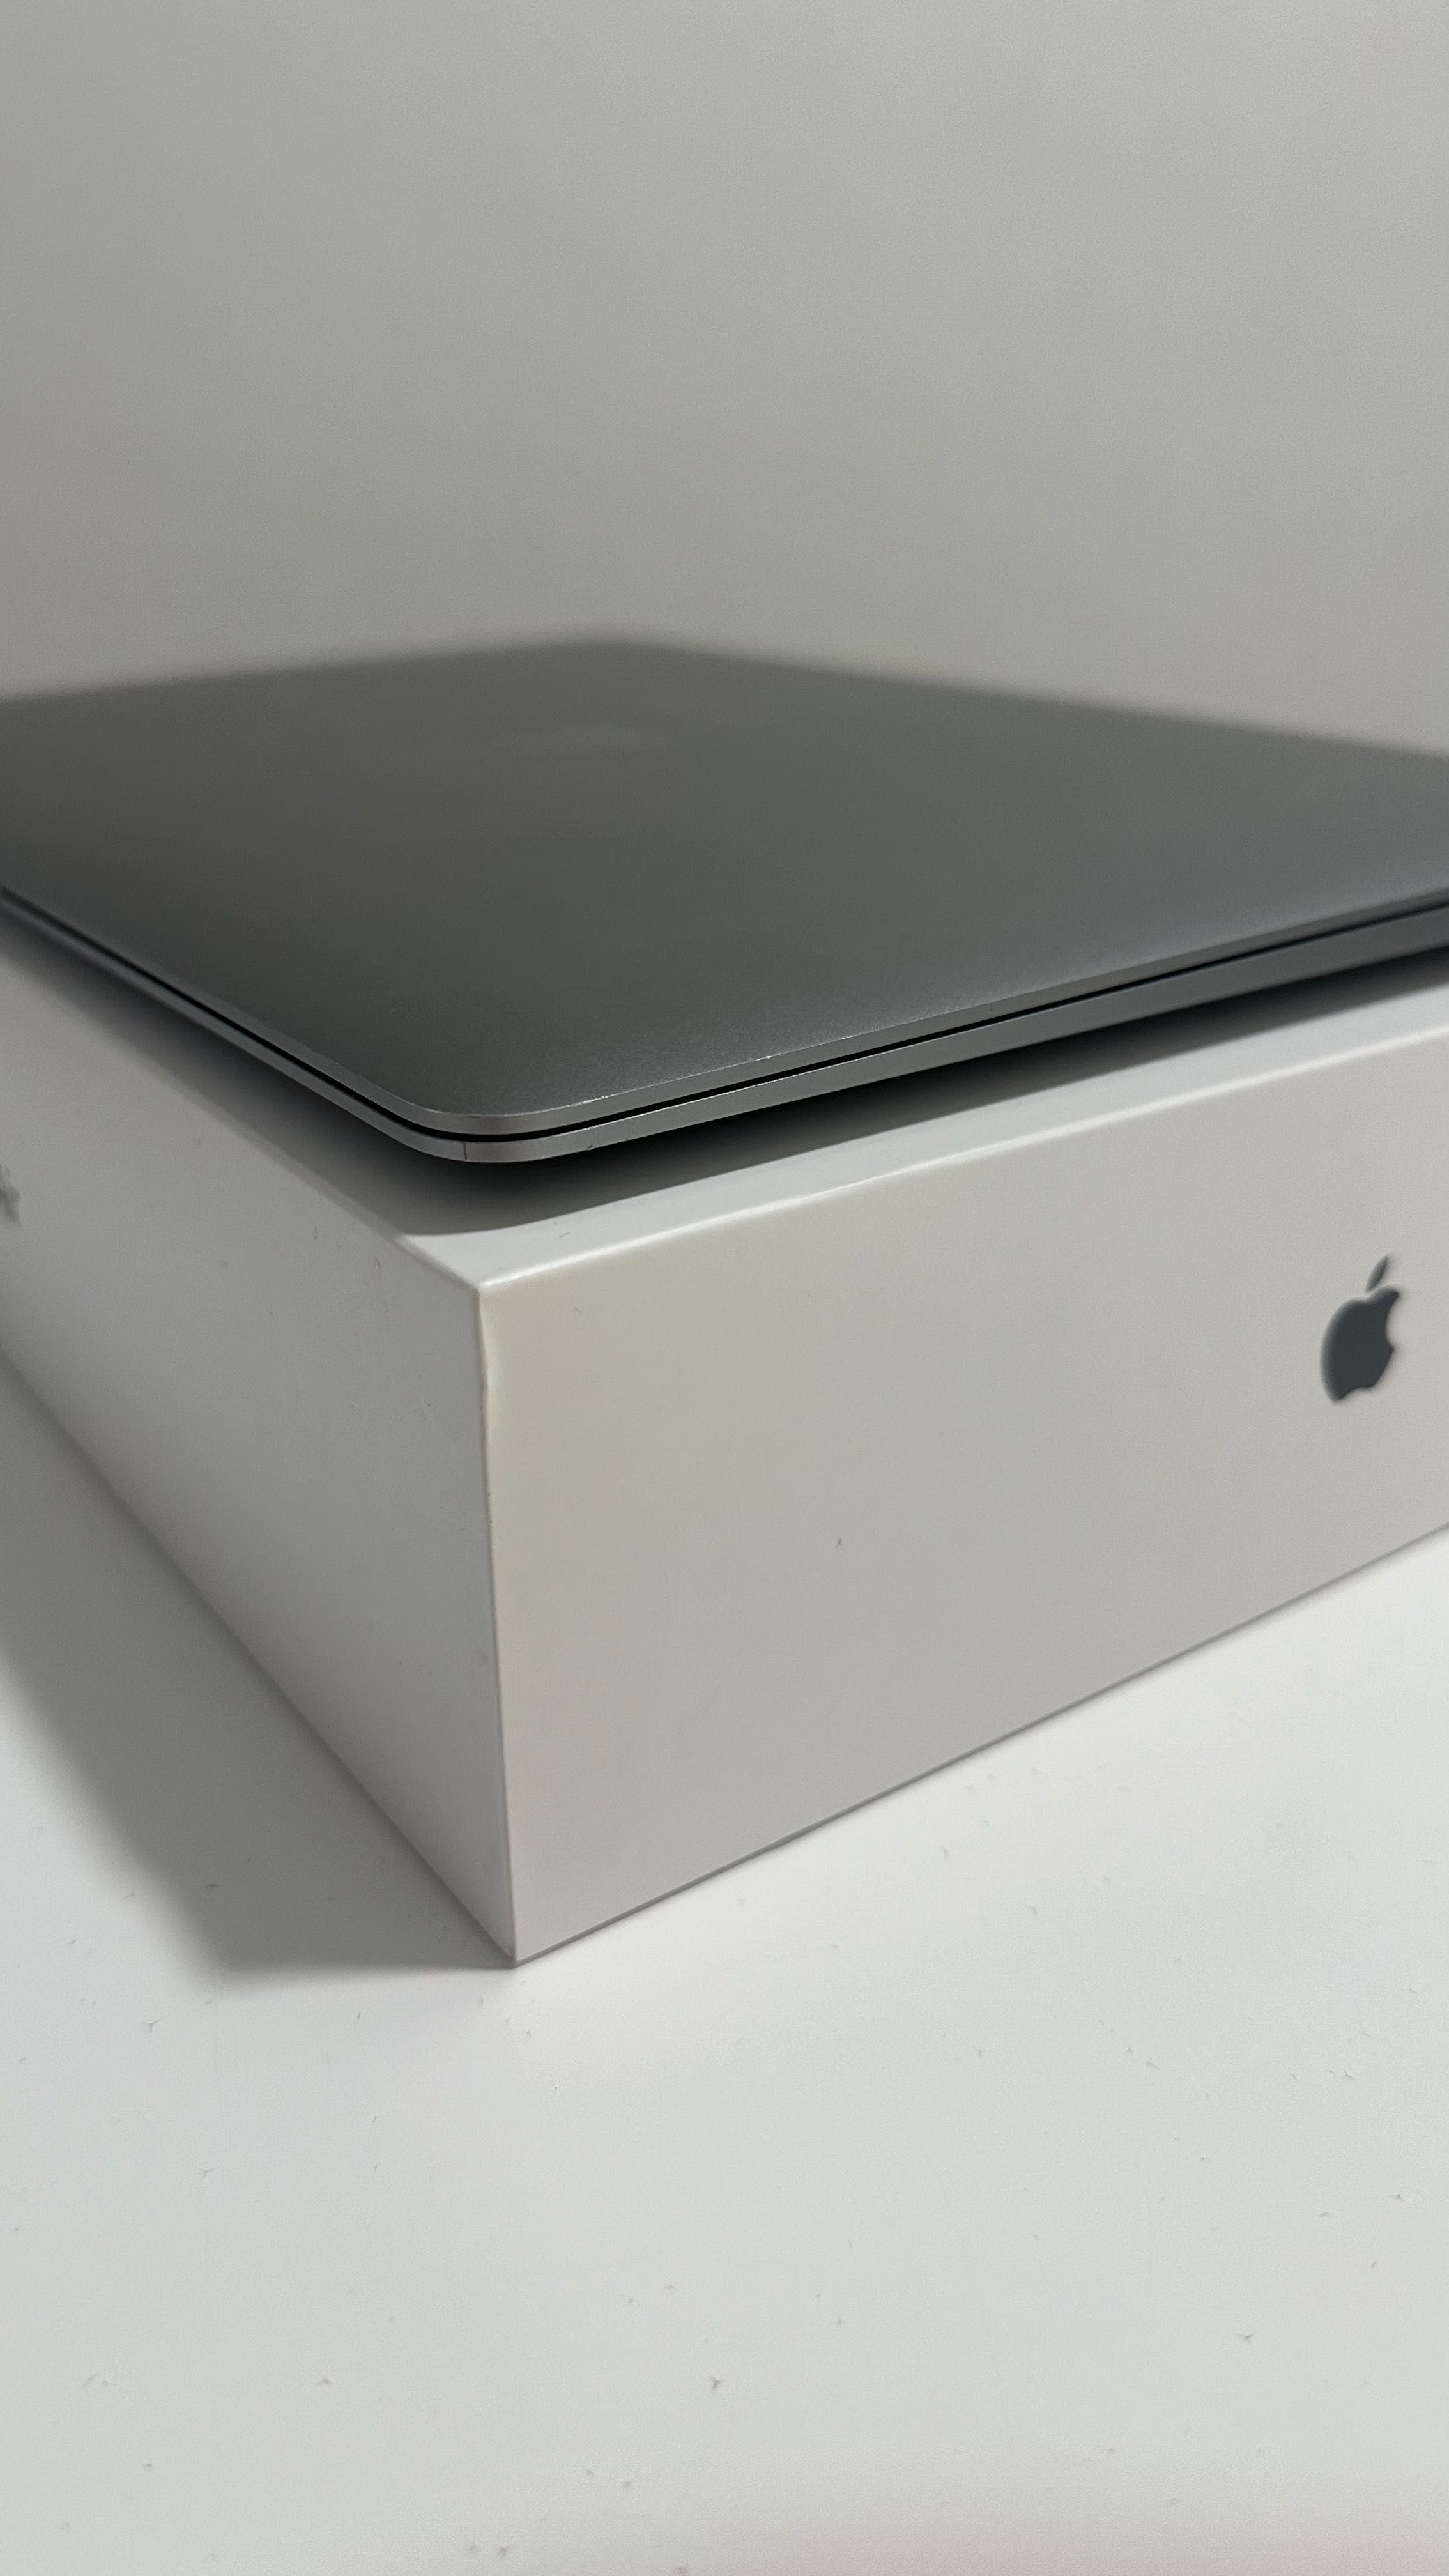 Macbook Air M1, 8 GB, 256 SSD, 2021 Space Gray